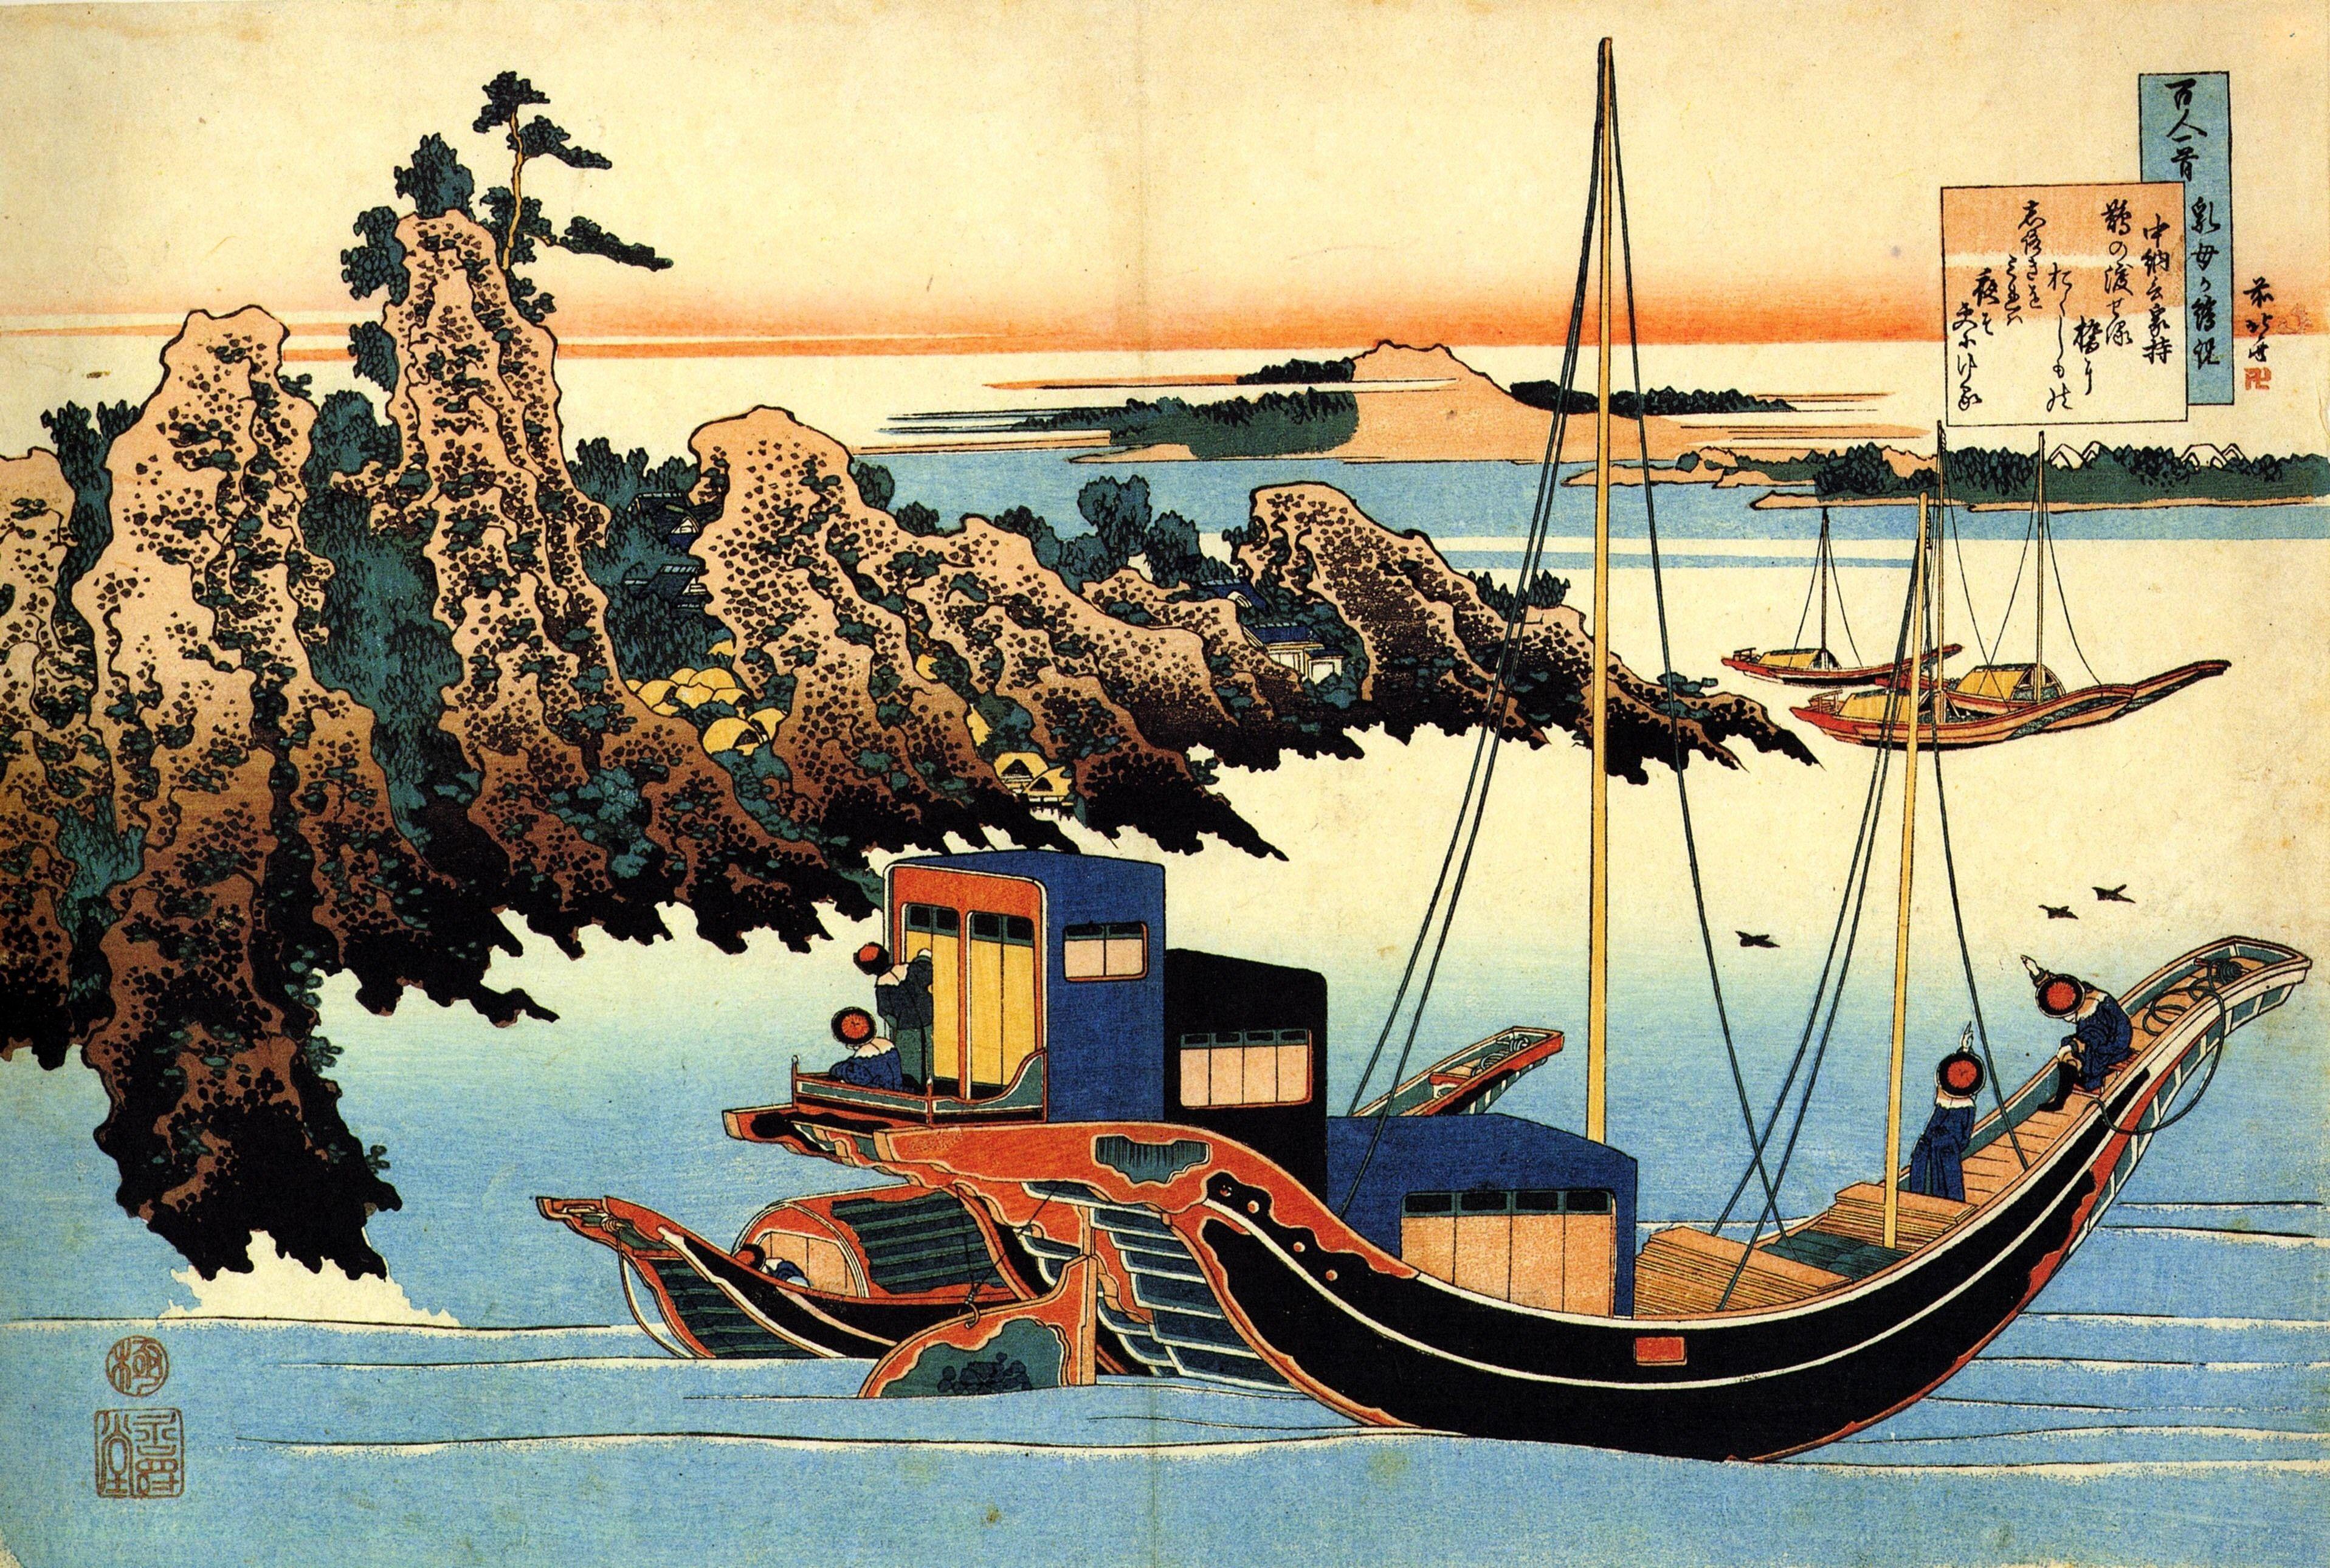 Download Wallpaper, Download japanese boats artwork katsushika